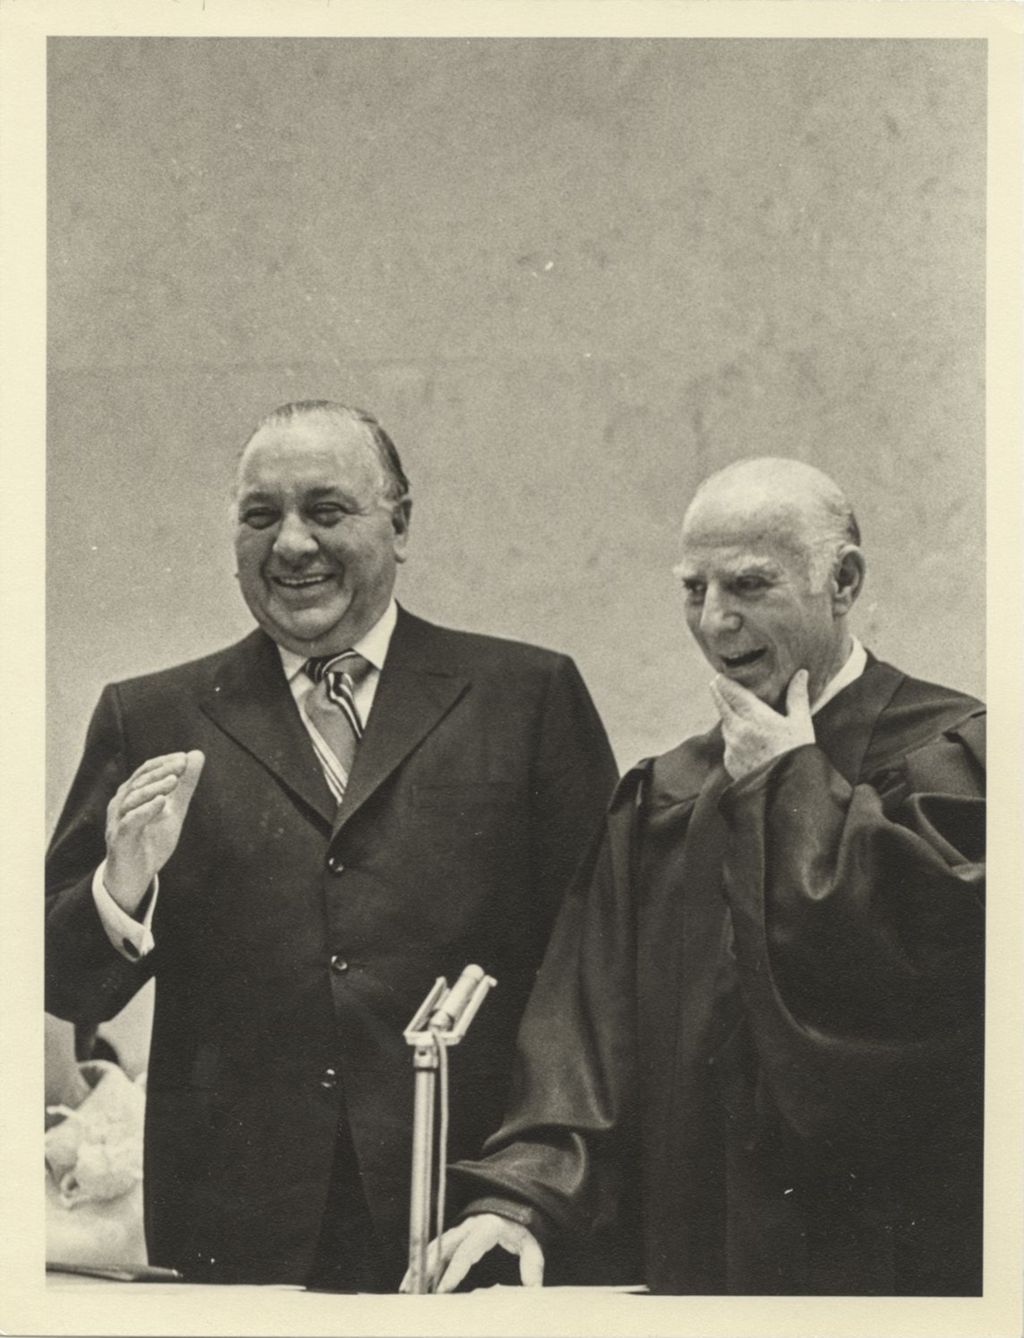 Miniature of Fifth mayoral inauguration, Richard J. Daley and Judge Marovitz